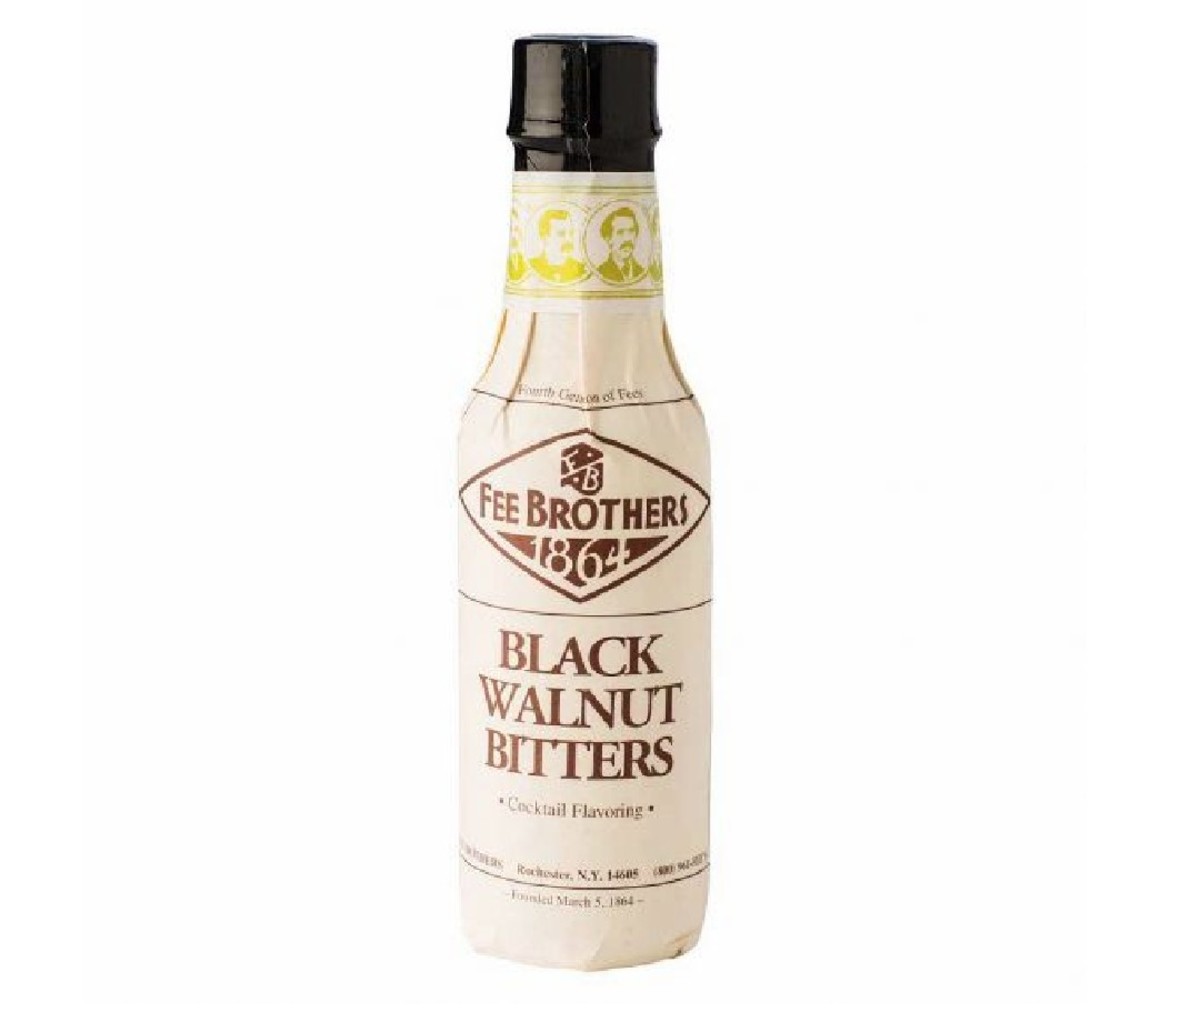 Bottle of Fee Brothers Black Walnut Bitters